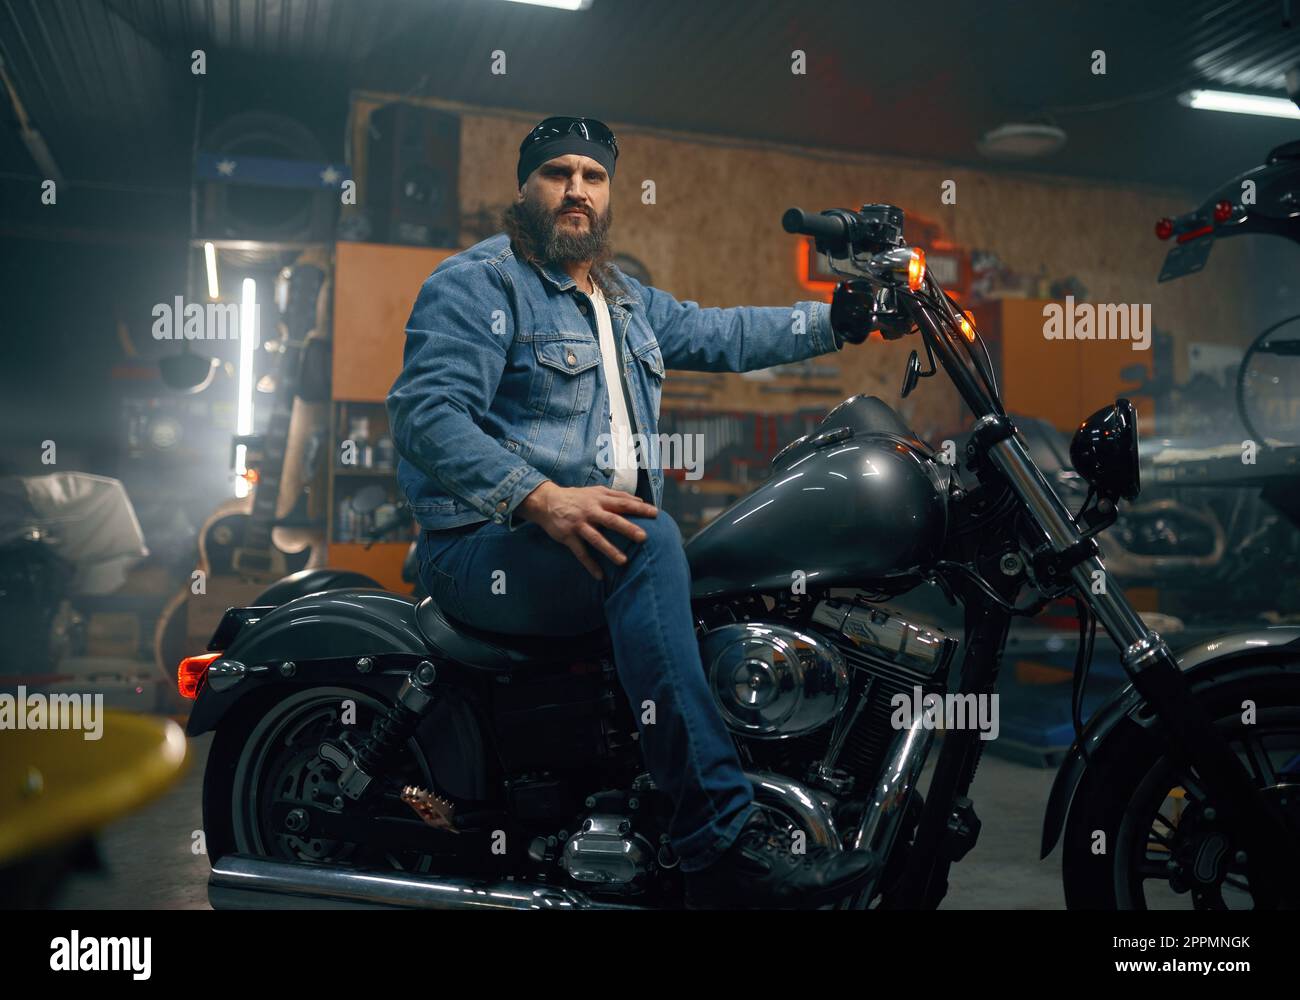 Portrait of mature bearded biker on motorcycle over garage interior Stock Photo